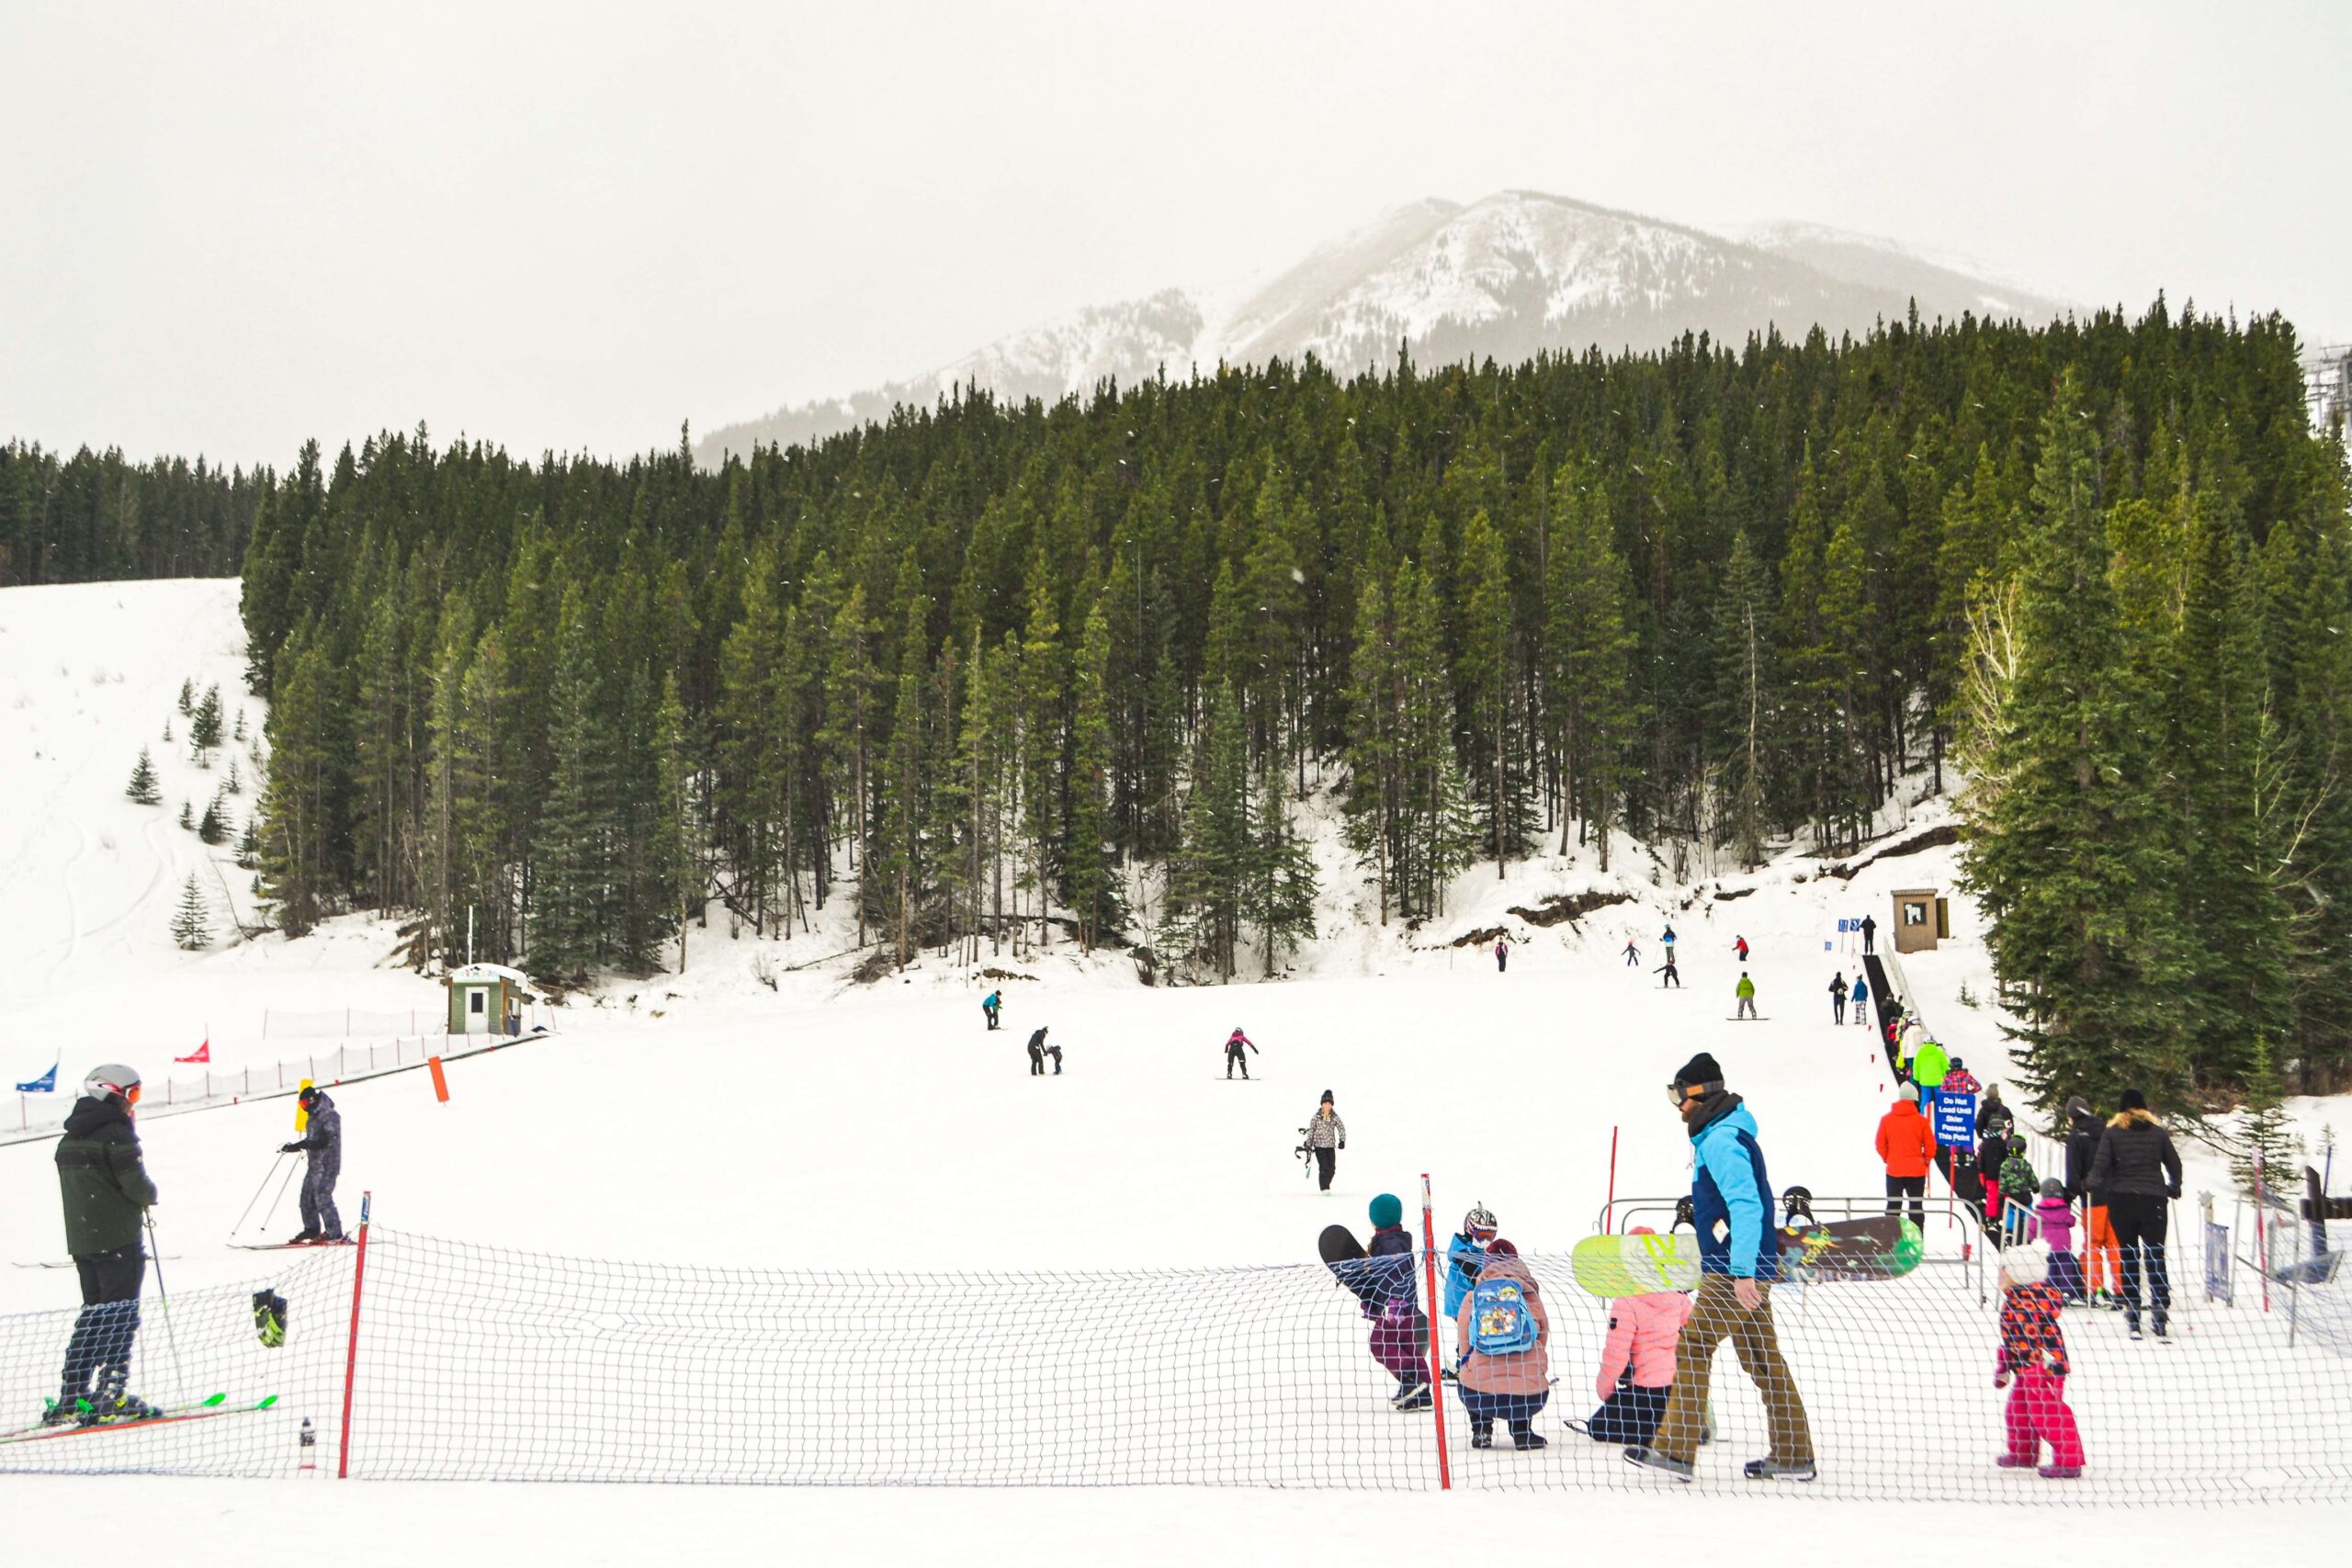 The Beginner Zone at Nakiska Ski Resort